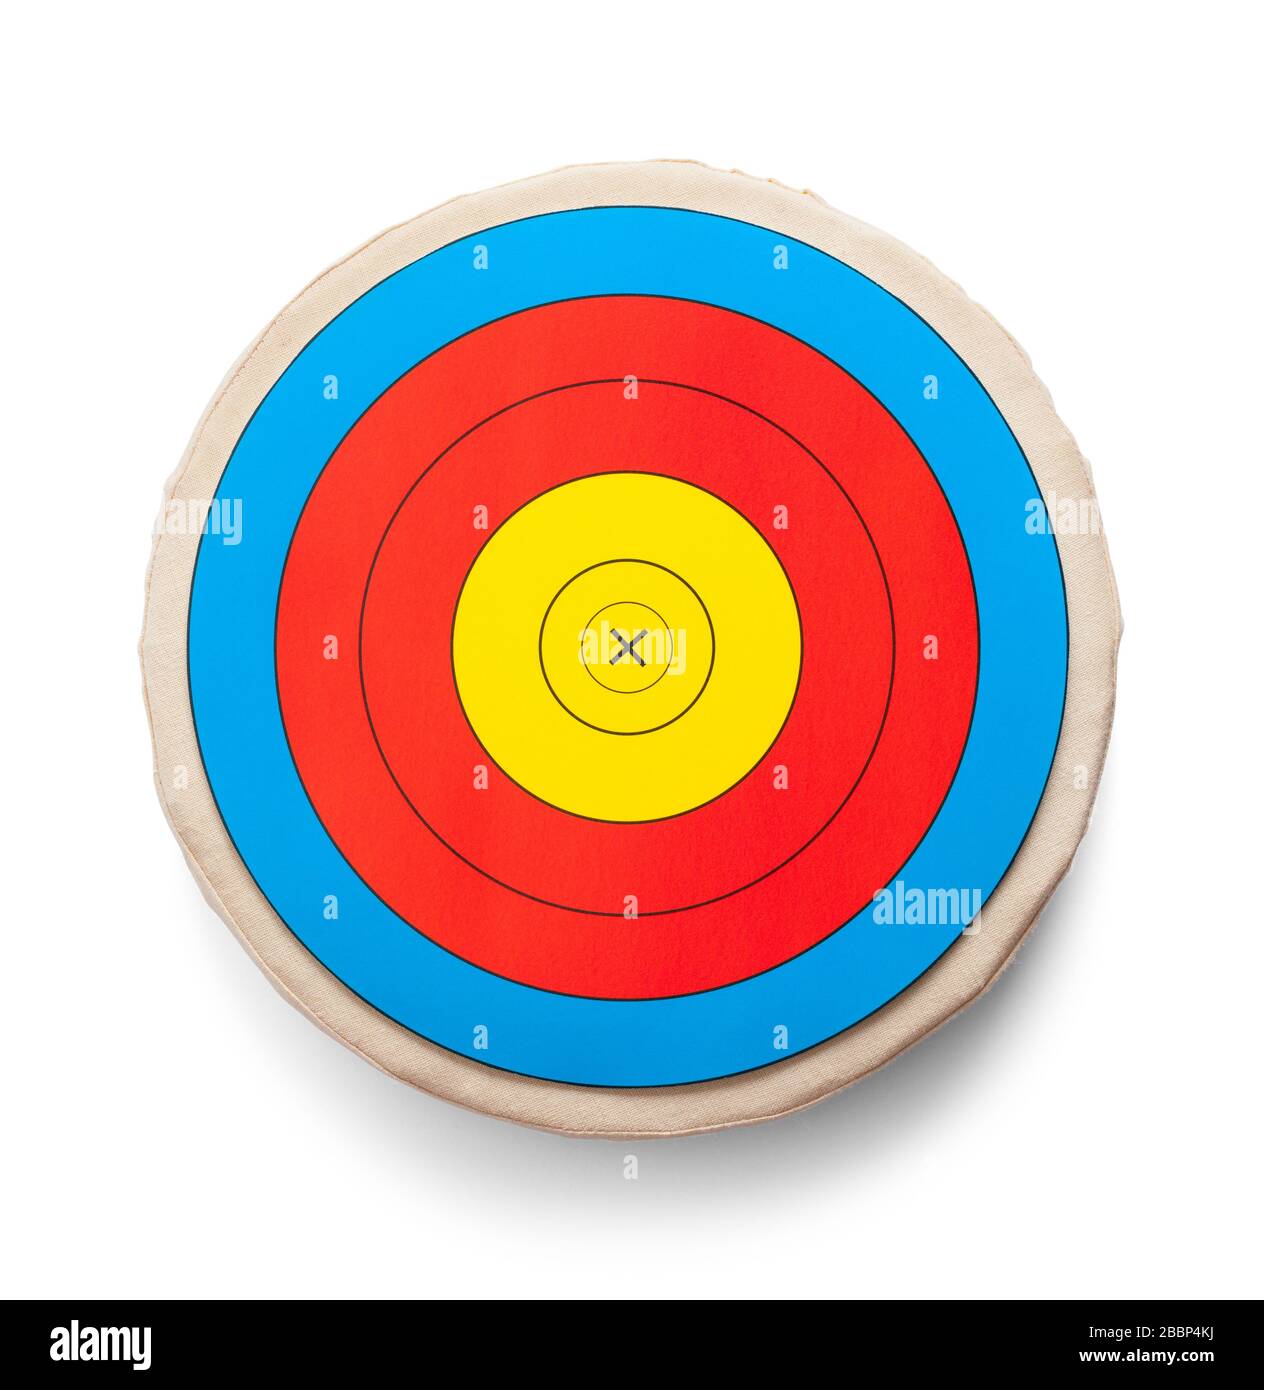 Round Archery Target Isolated on White Background. Stock Photo